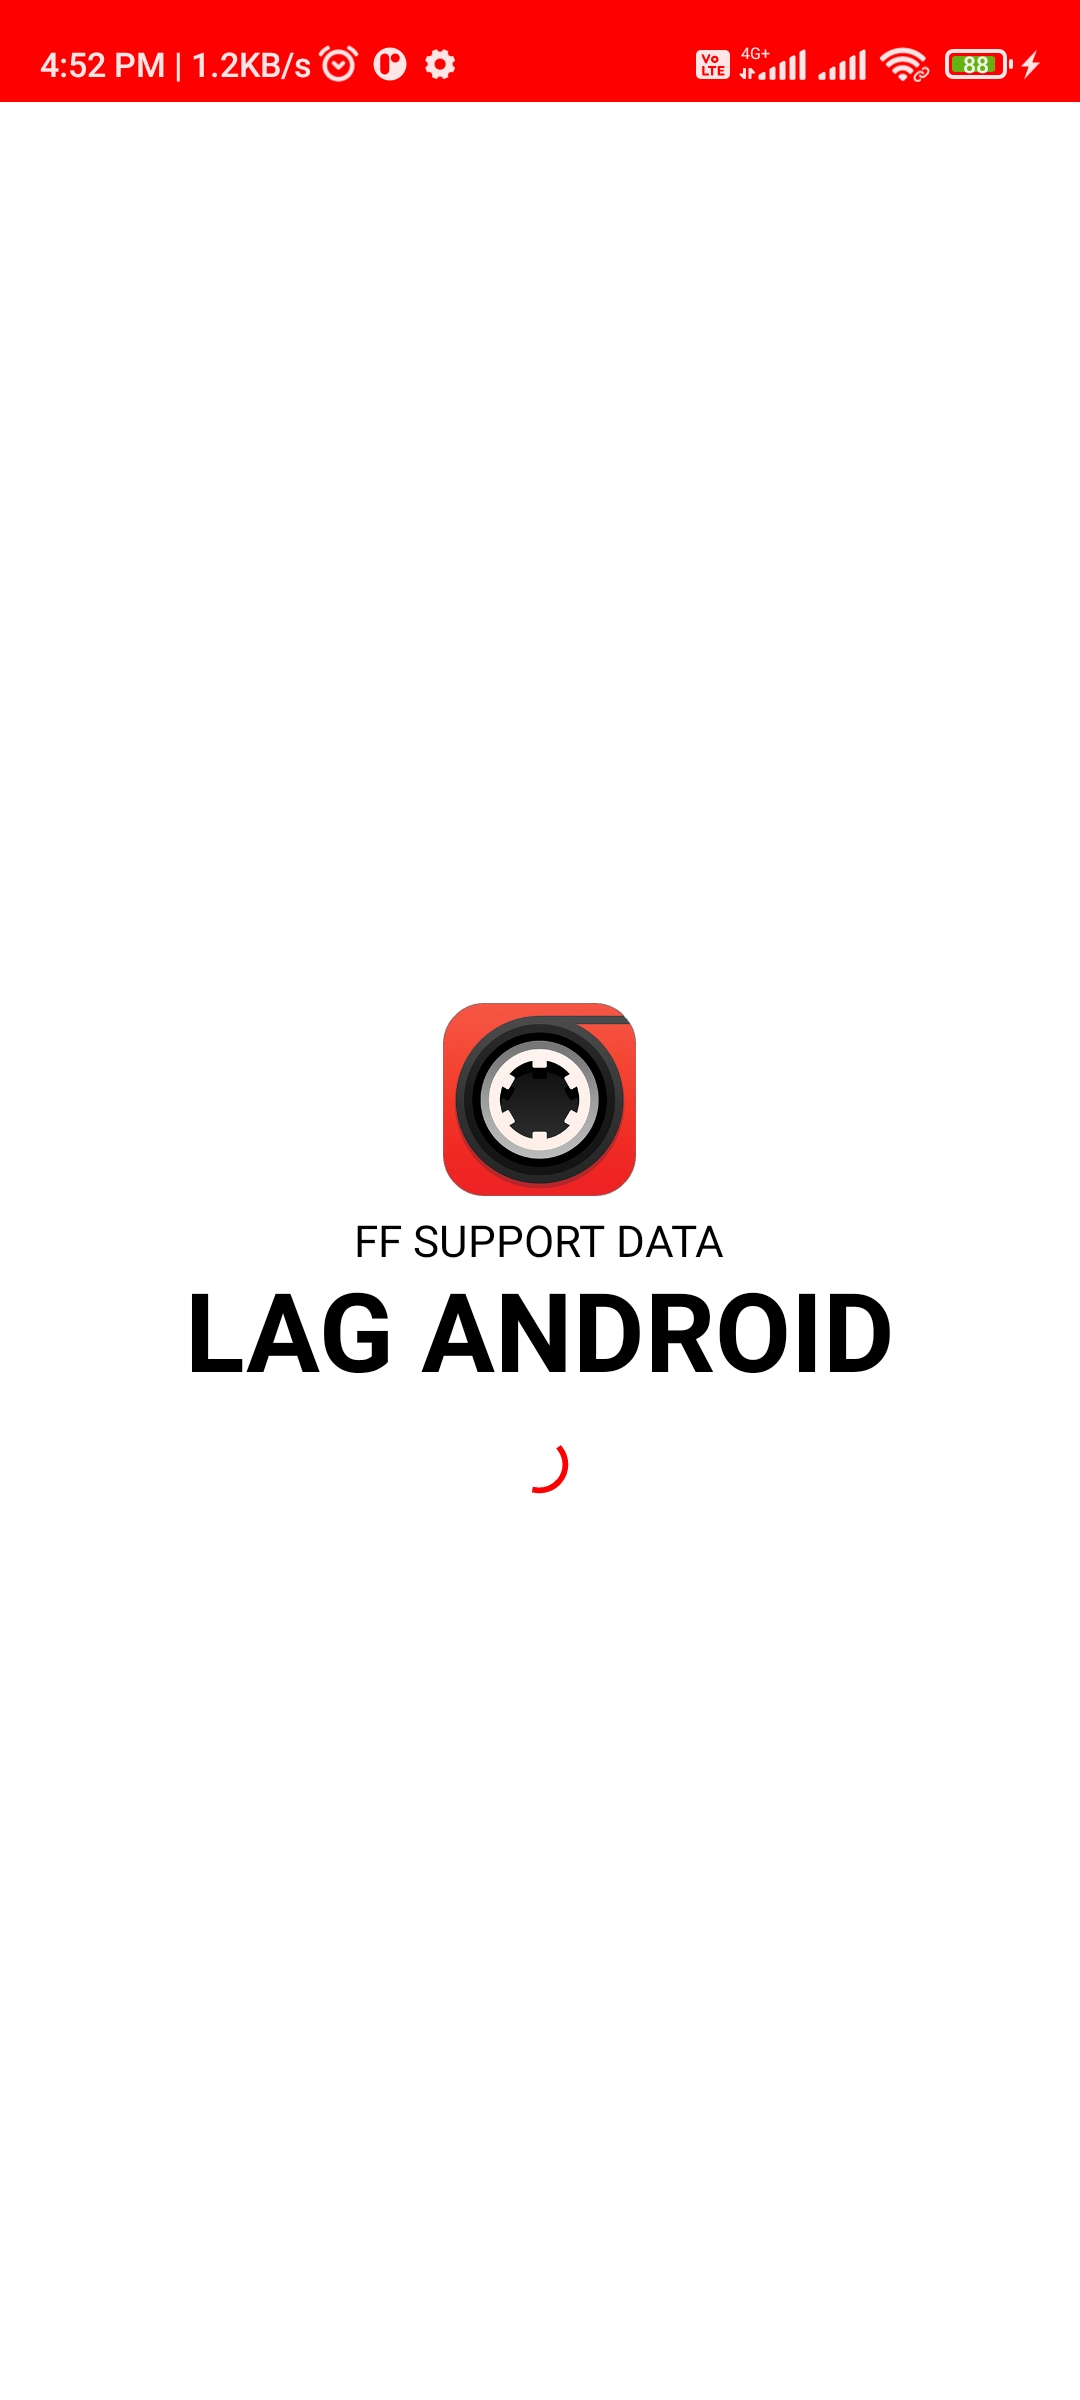 Install Ff Support Data Apk